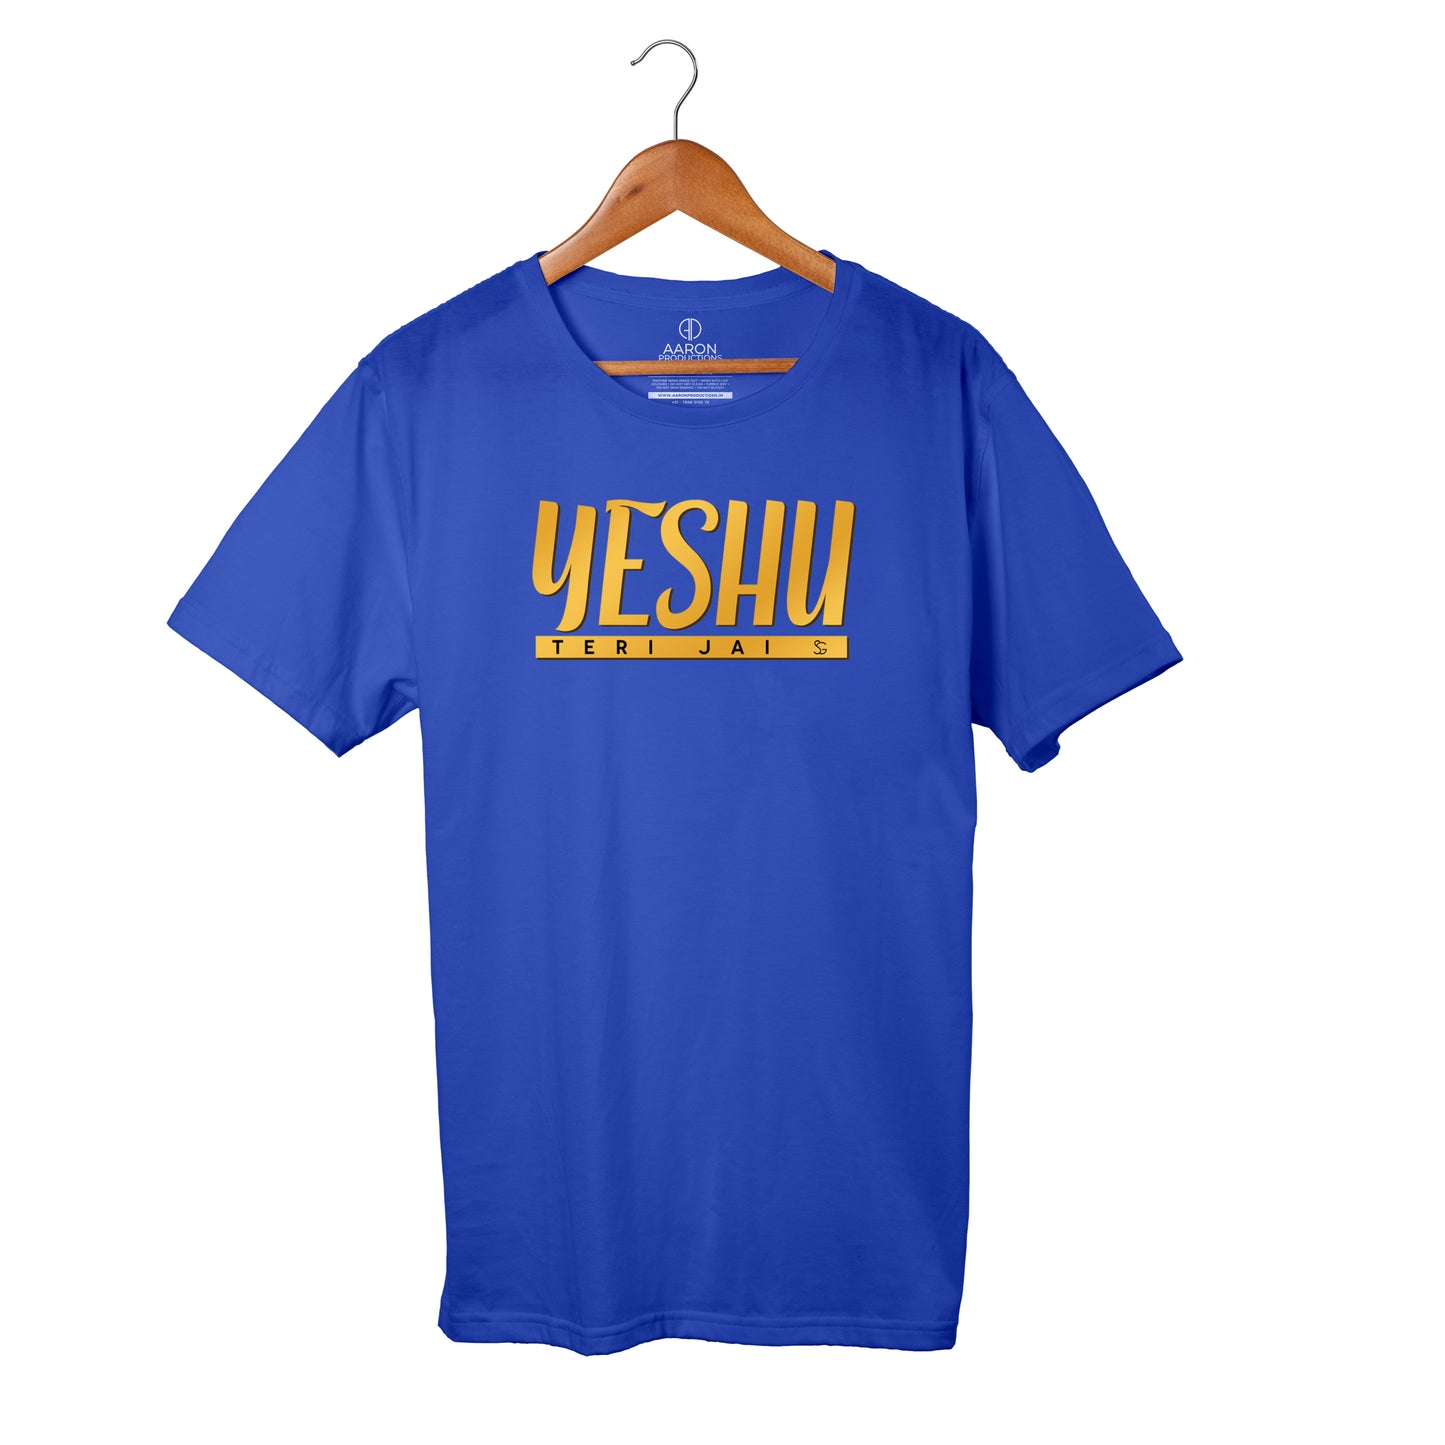 Tshirt - Yeshu Teri Jai